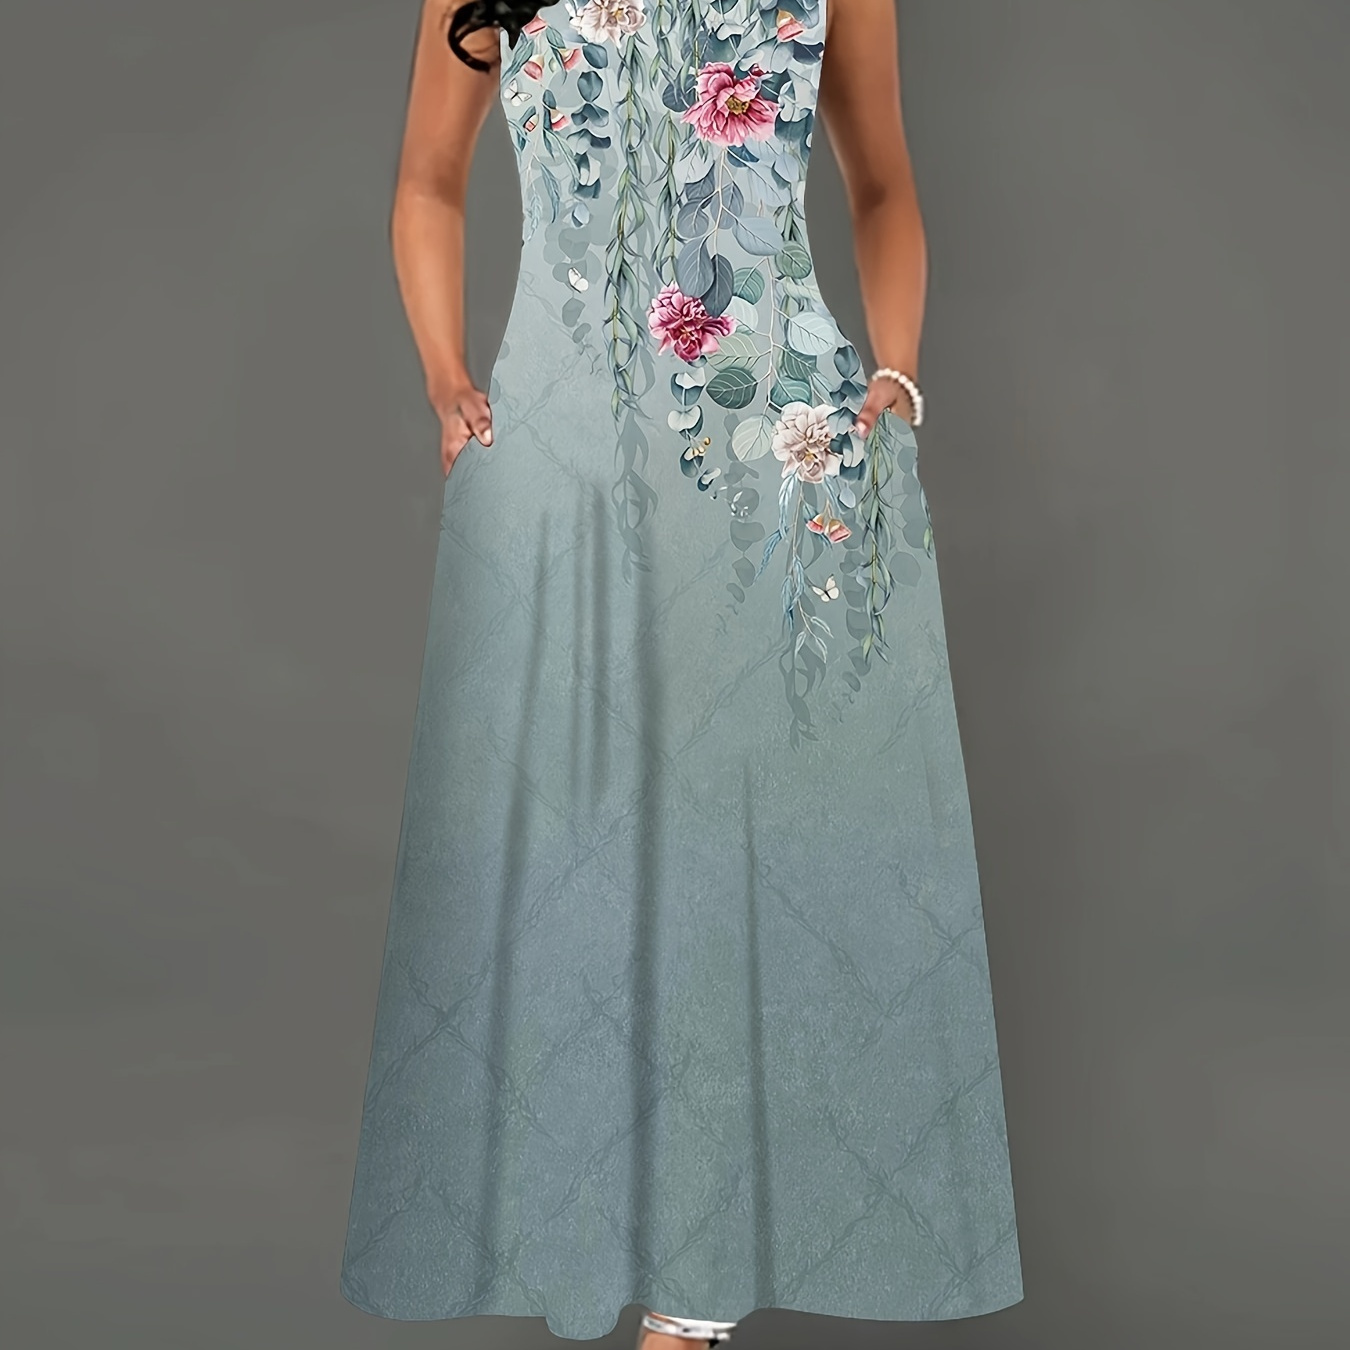 

Floral Print With Pocket Dress, Elegant Sleeveless Keyhole Neckline Dress For Spring & Summer, Women's Clothing